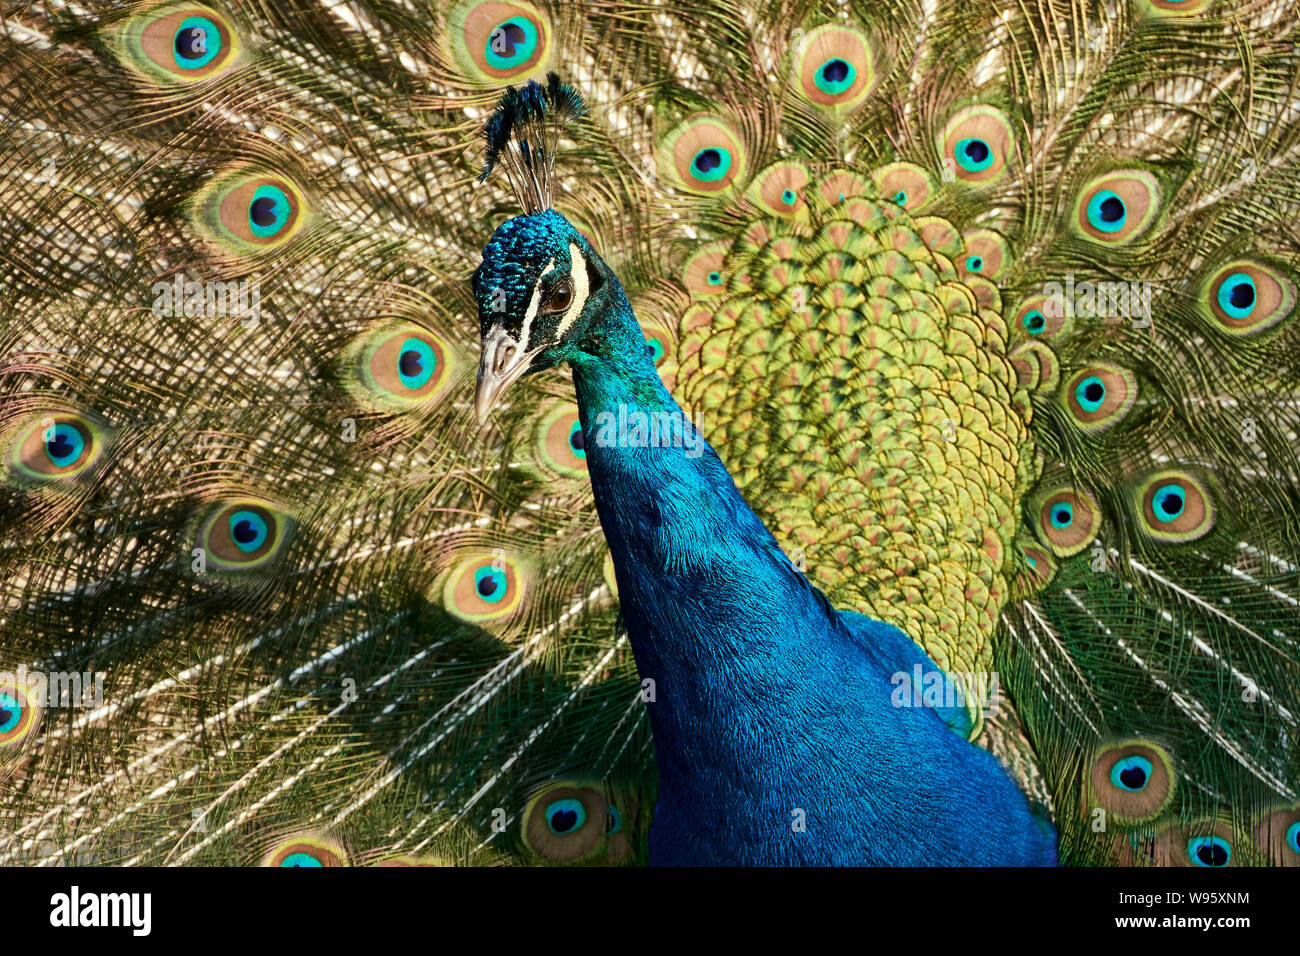 Primo piano di una pafowl indiana blu (Pavo cristatus) shwoing piume e eyespot Foto Stock